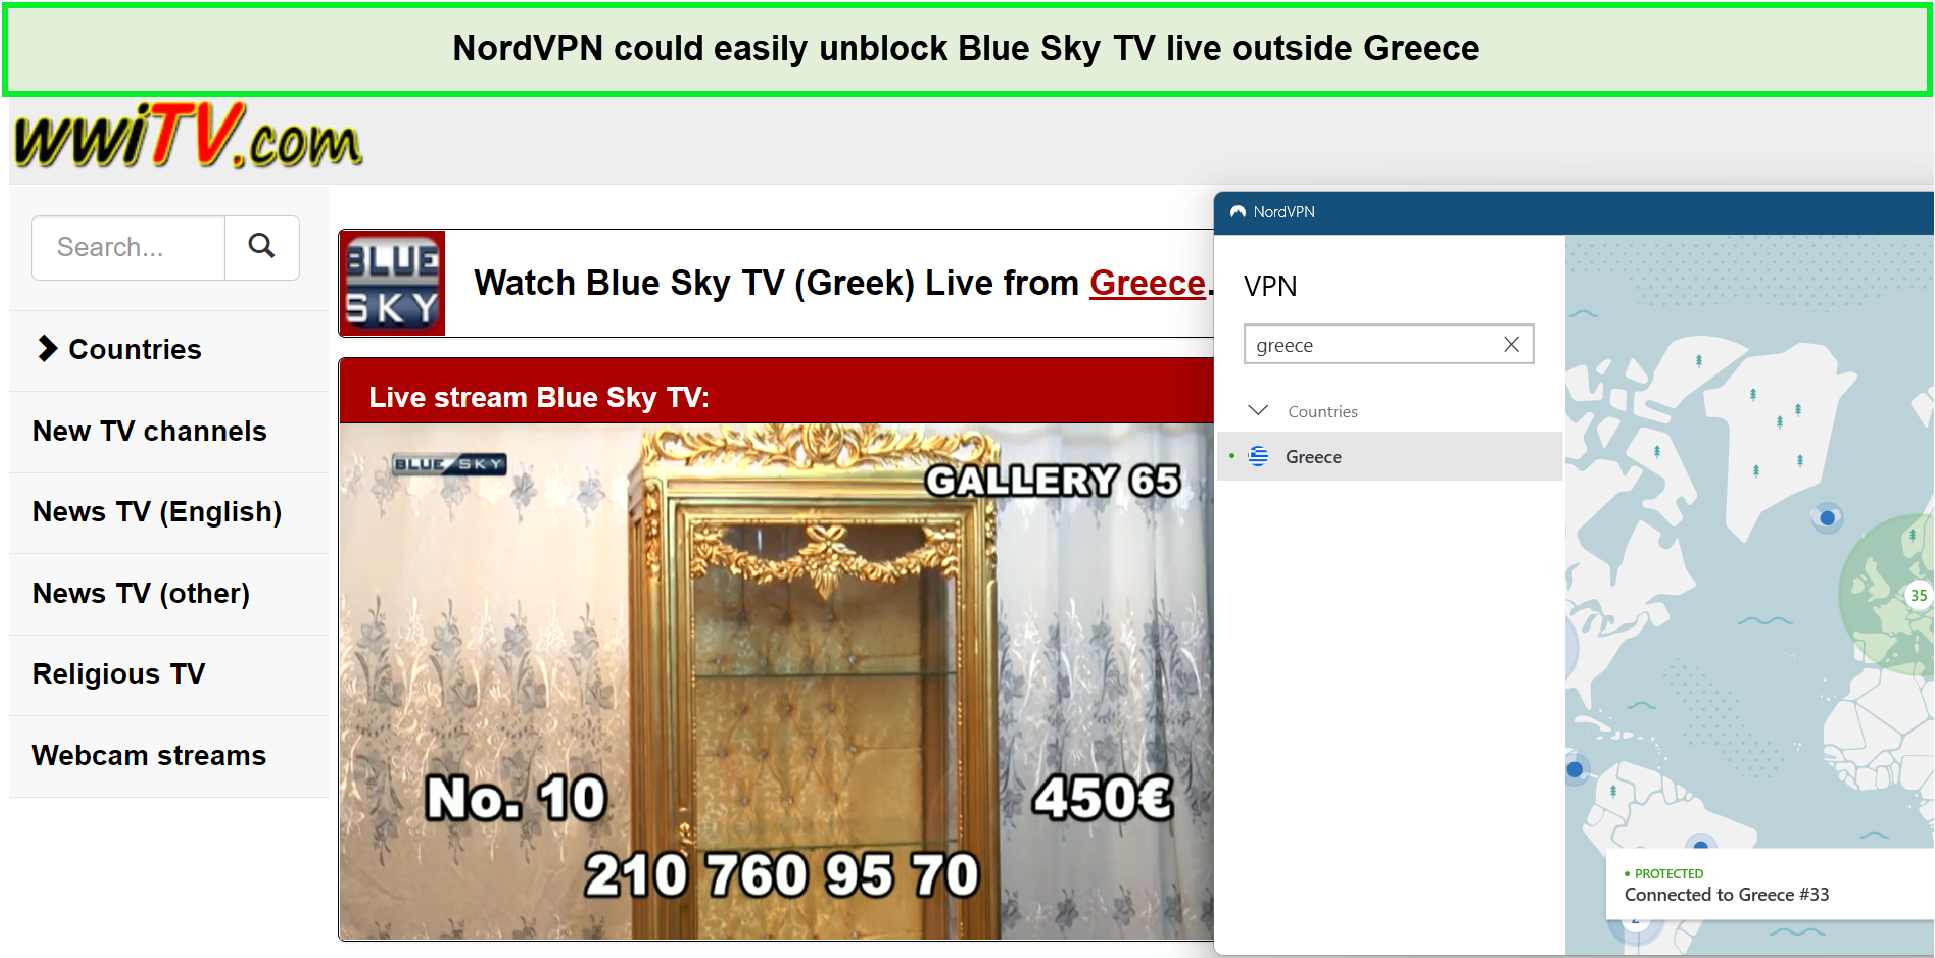 NordVPN-easily-unblock-Bly-Sky-TV-outside-Greece-For Hong Kong Users